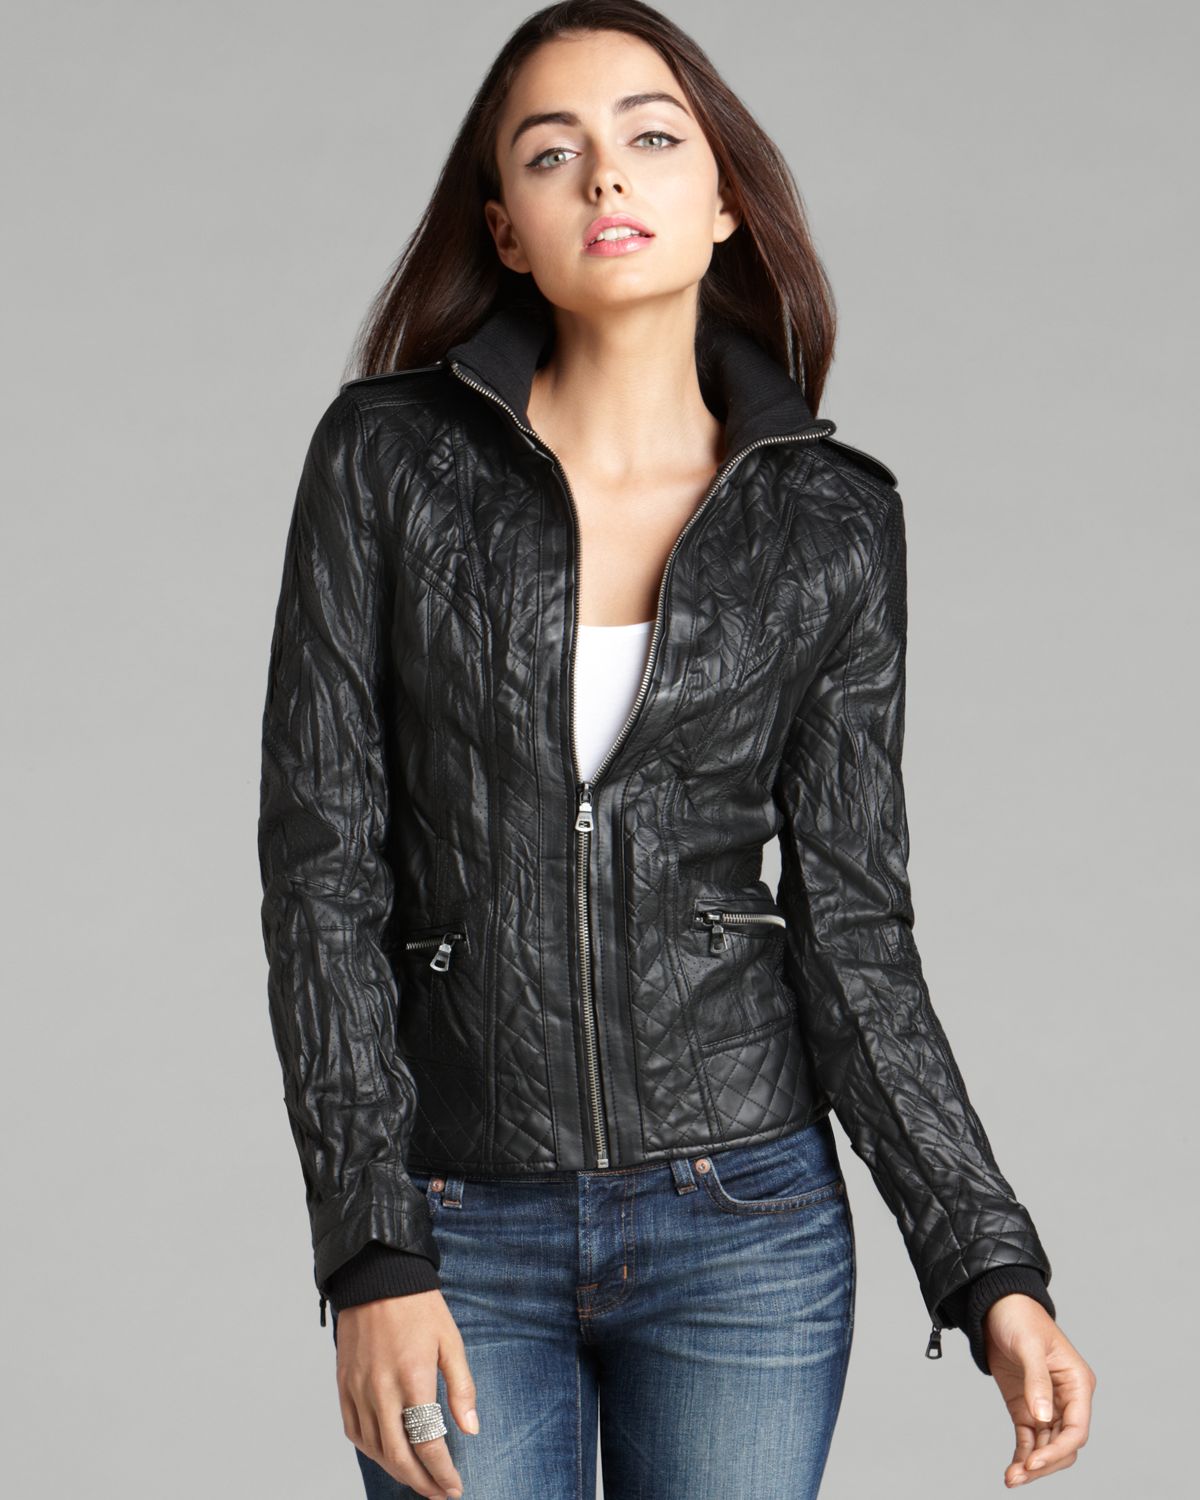 Lyst - Guess Jacket Berlin Faux Leather in Black